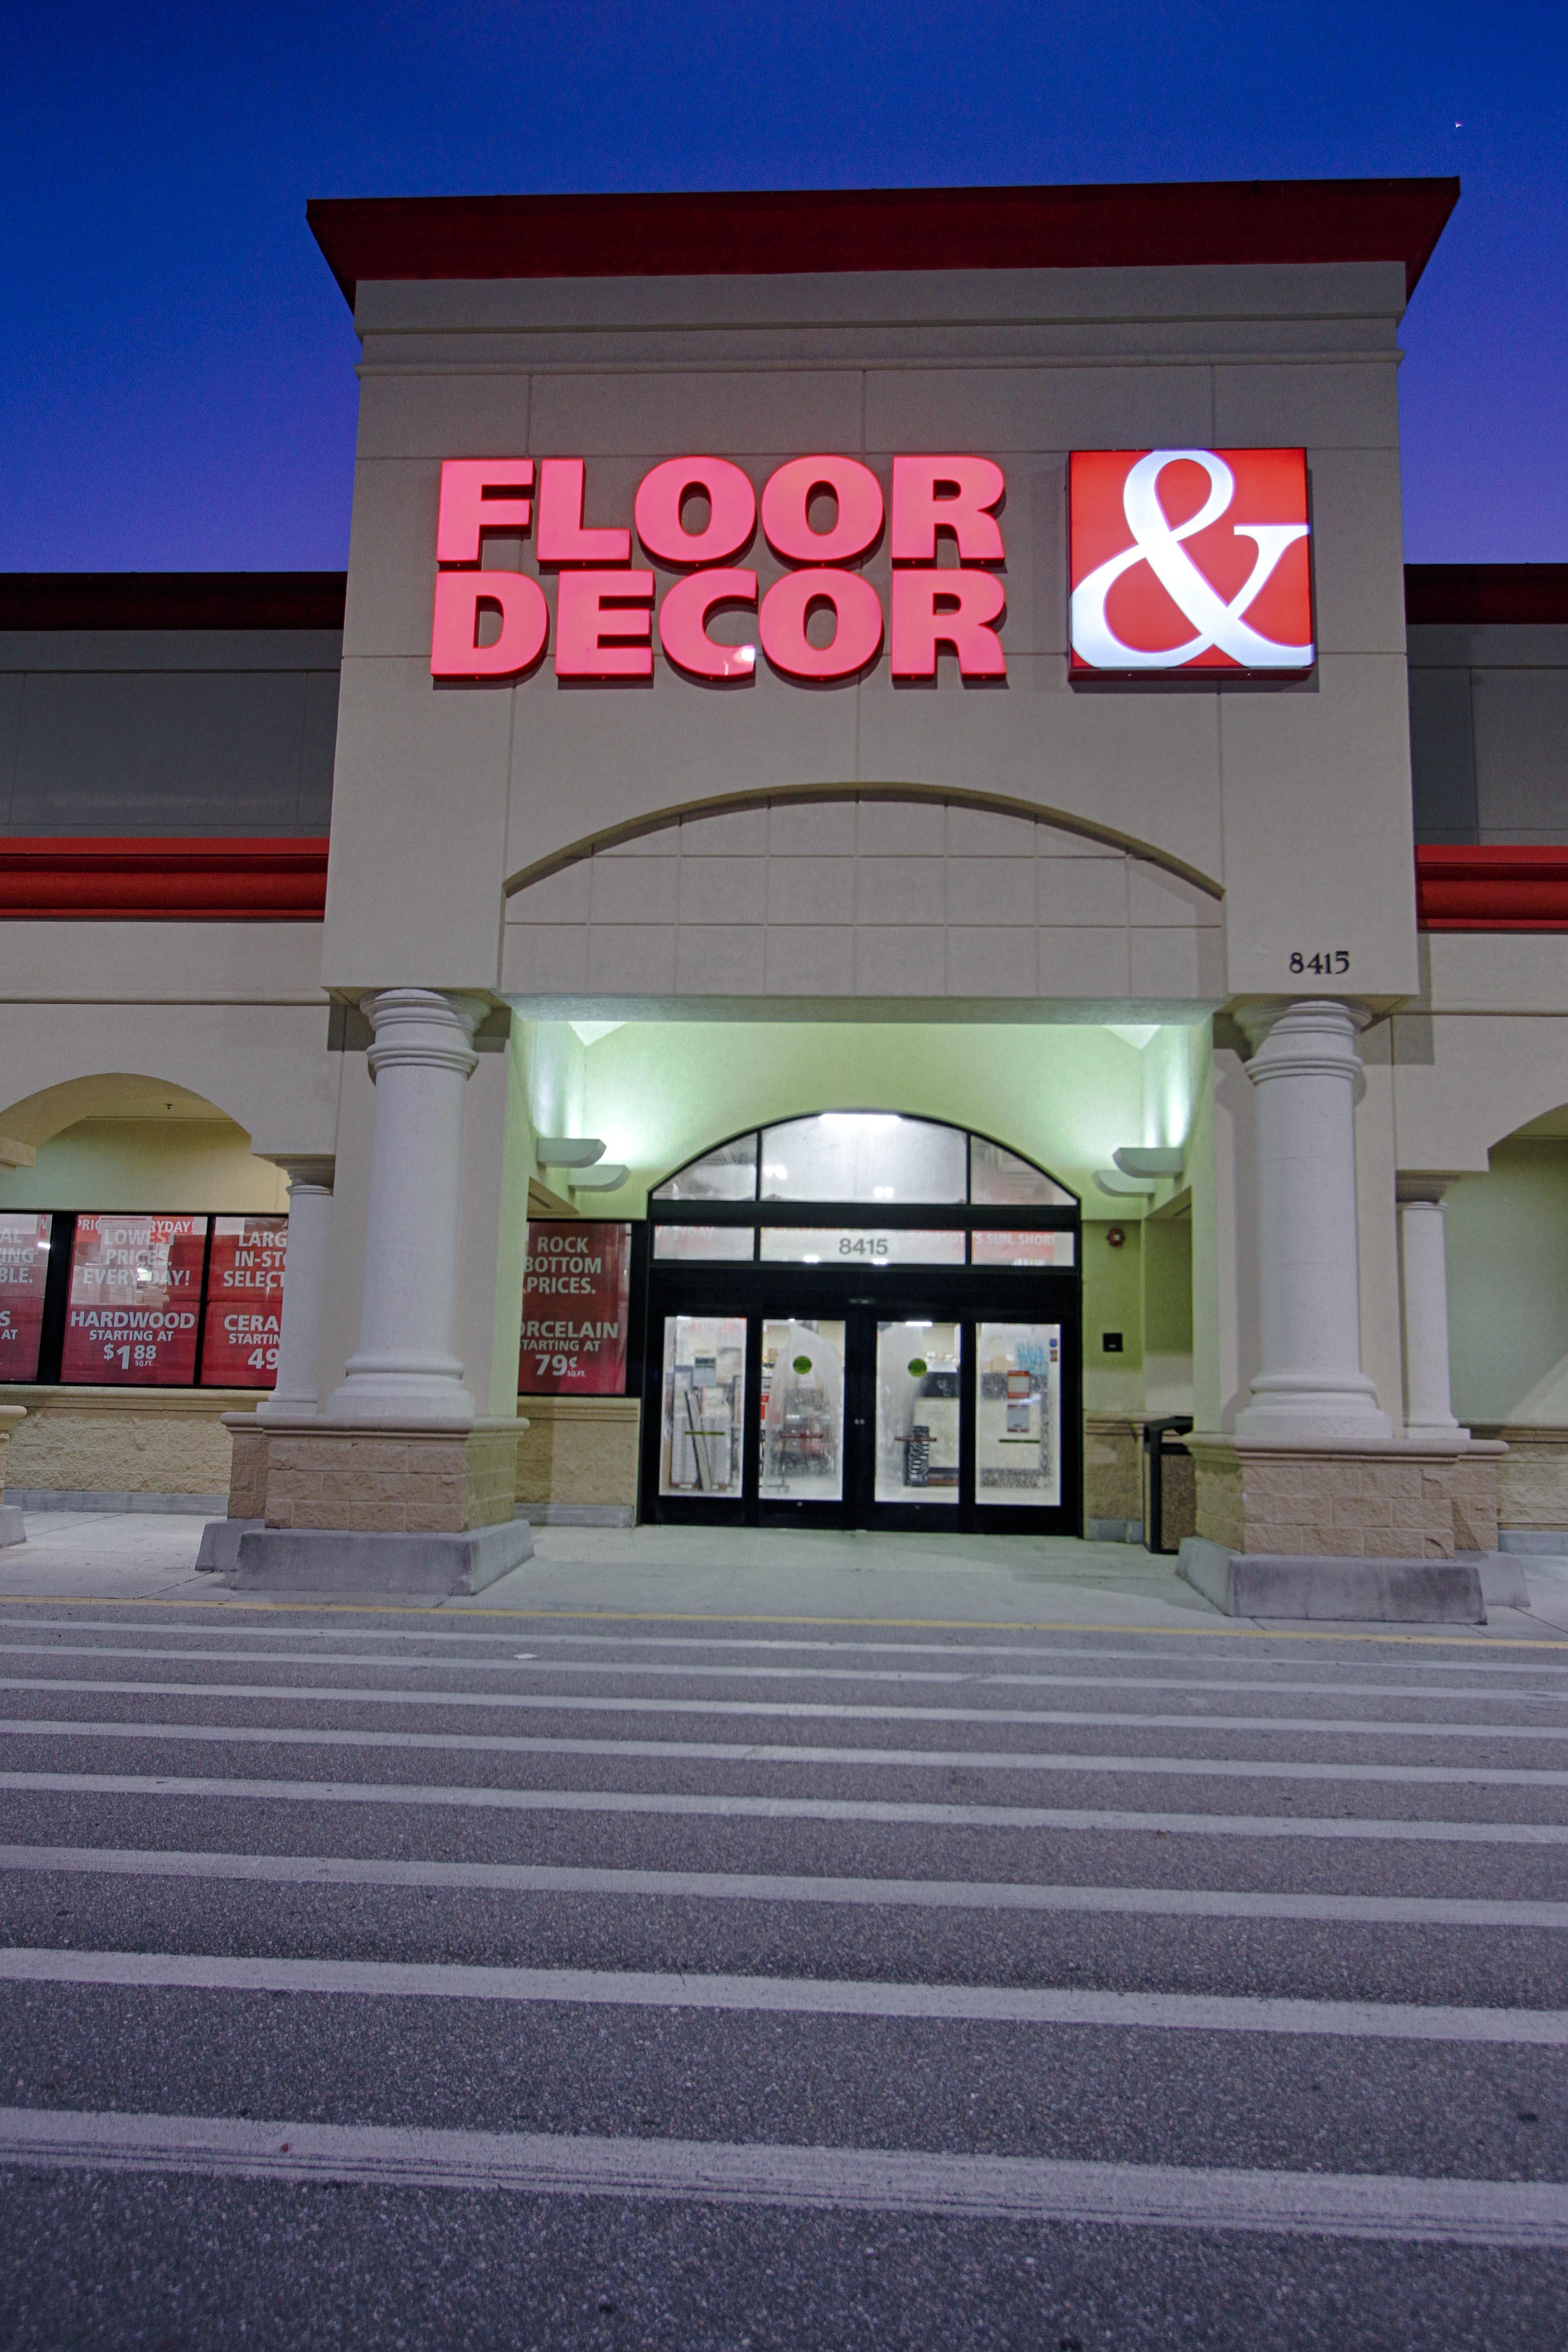 Floor & Decor Coupons near me in Sarasota, FL 34243 | 8coupons